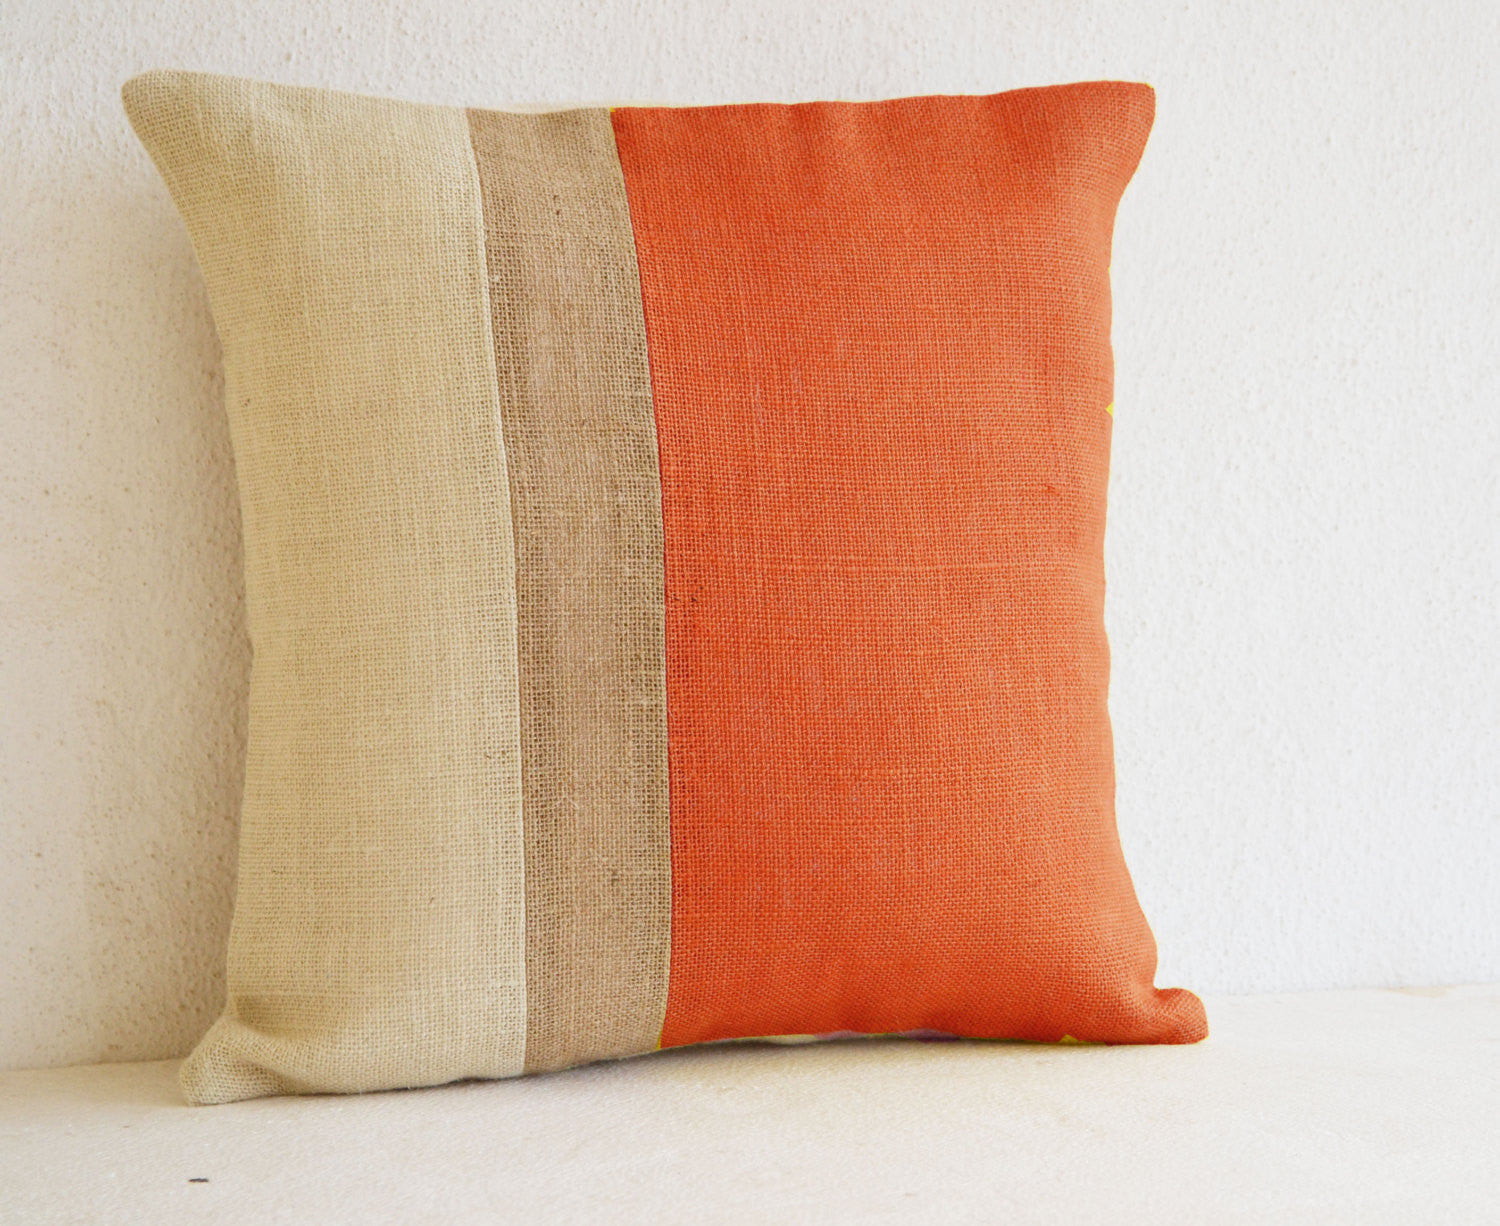 Handmade orange burlap decorative throw pillow with color black